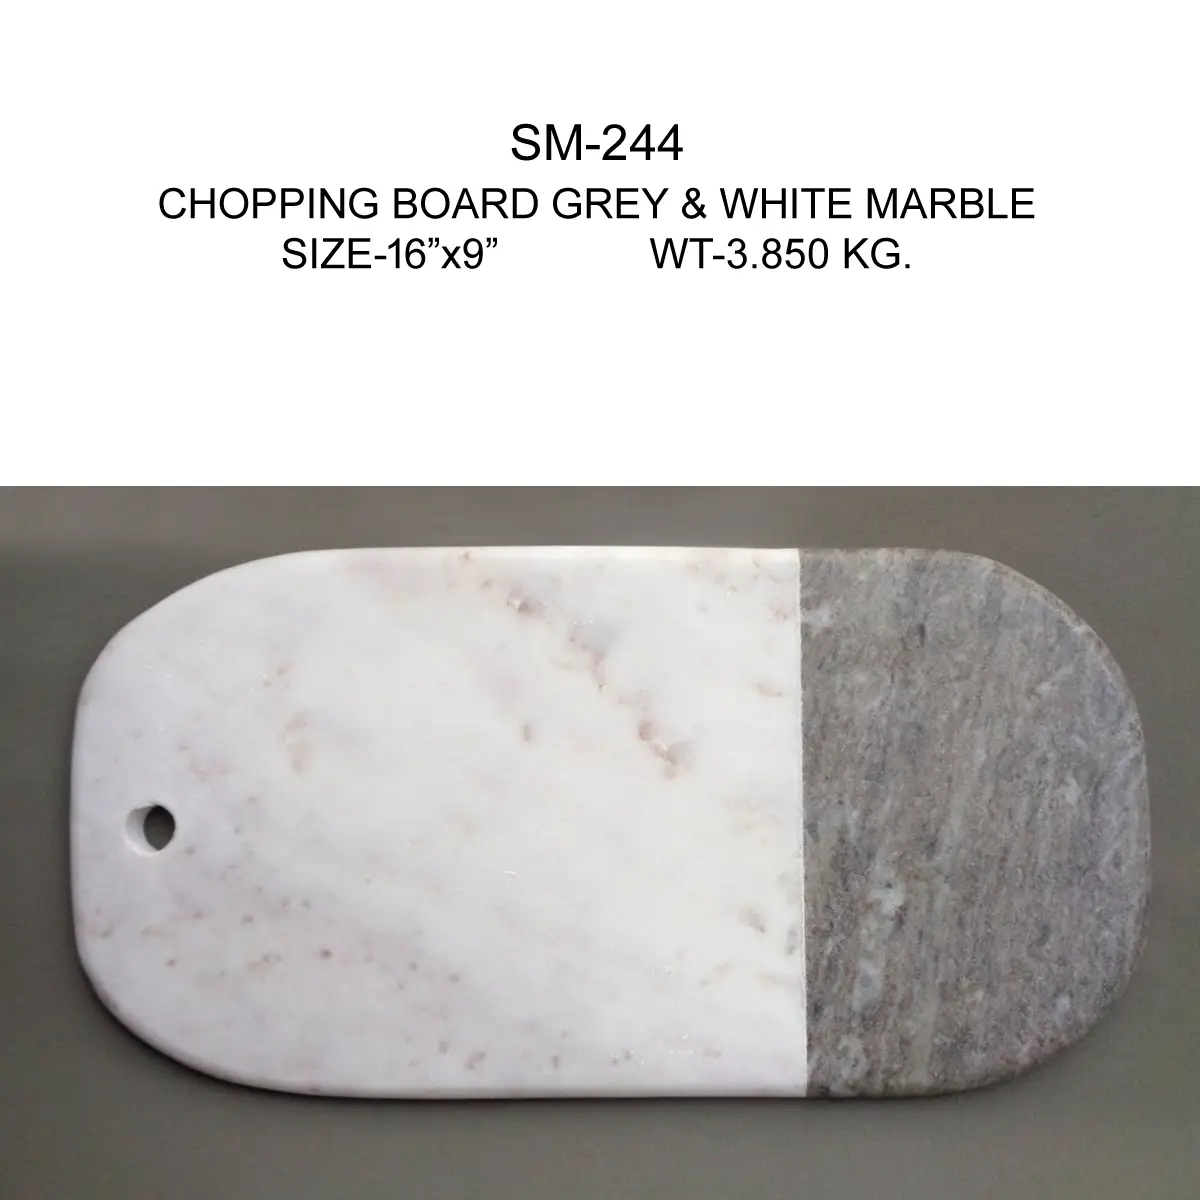 CHOPPING BOARD GREY & WHITE MARBLE